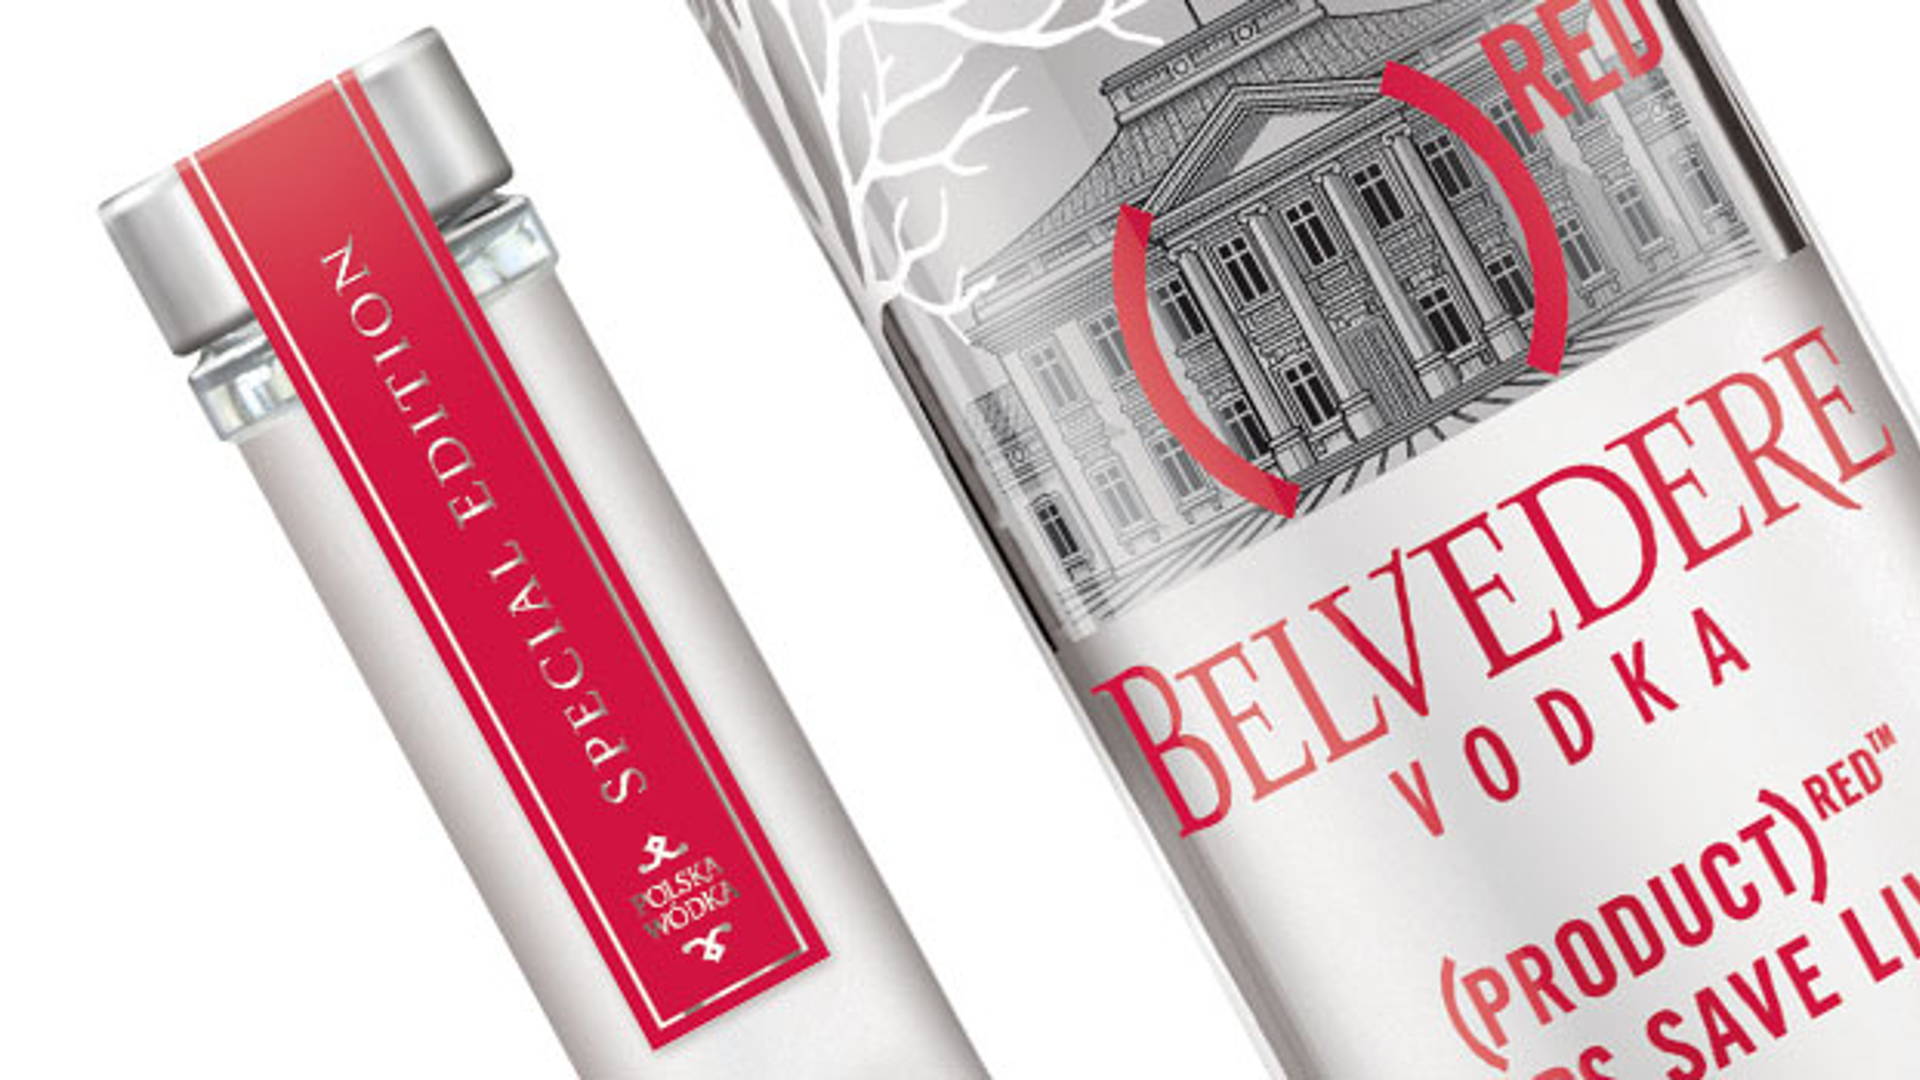 Belvedere) RED | Dieline - Design, Branding & Packaging Inspiration